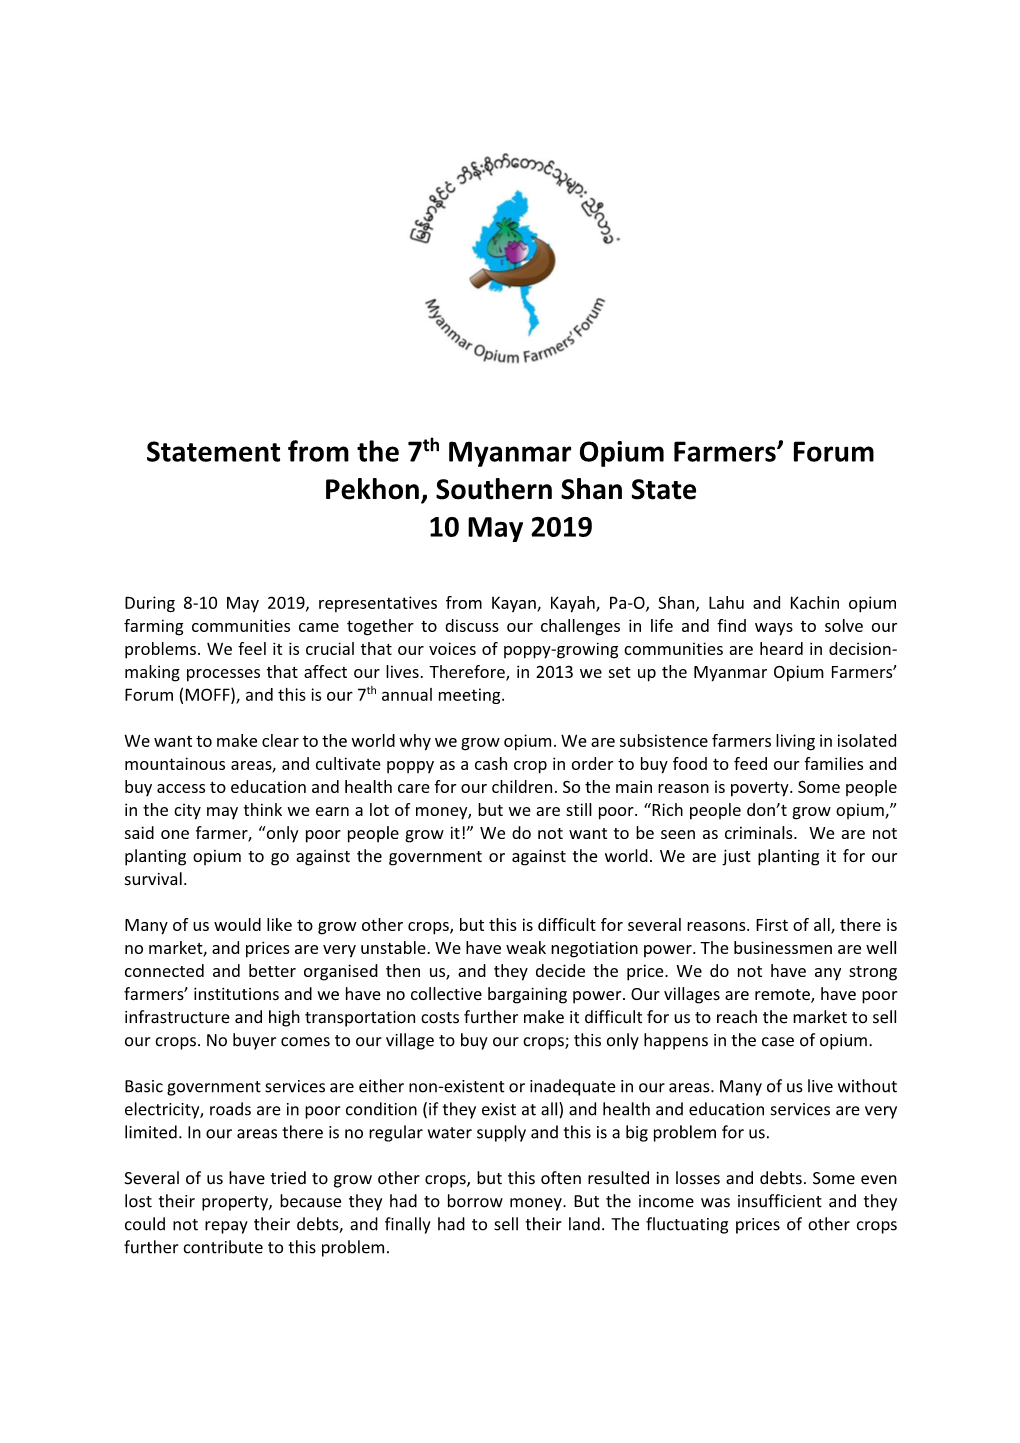 Statement from the 7Th Myanmar Opium Farmers' Forum Pekhon